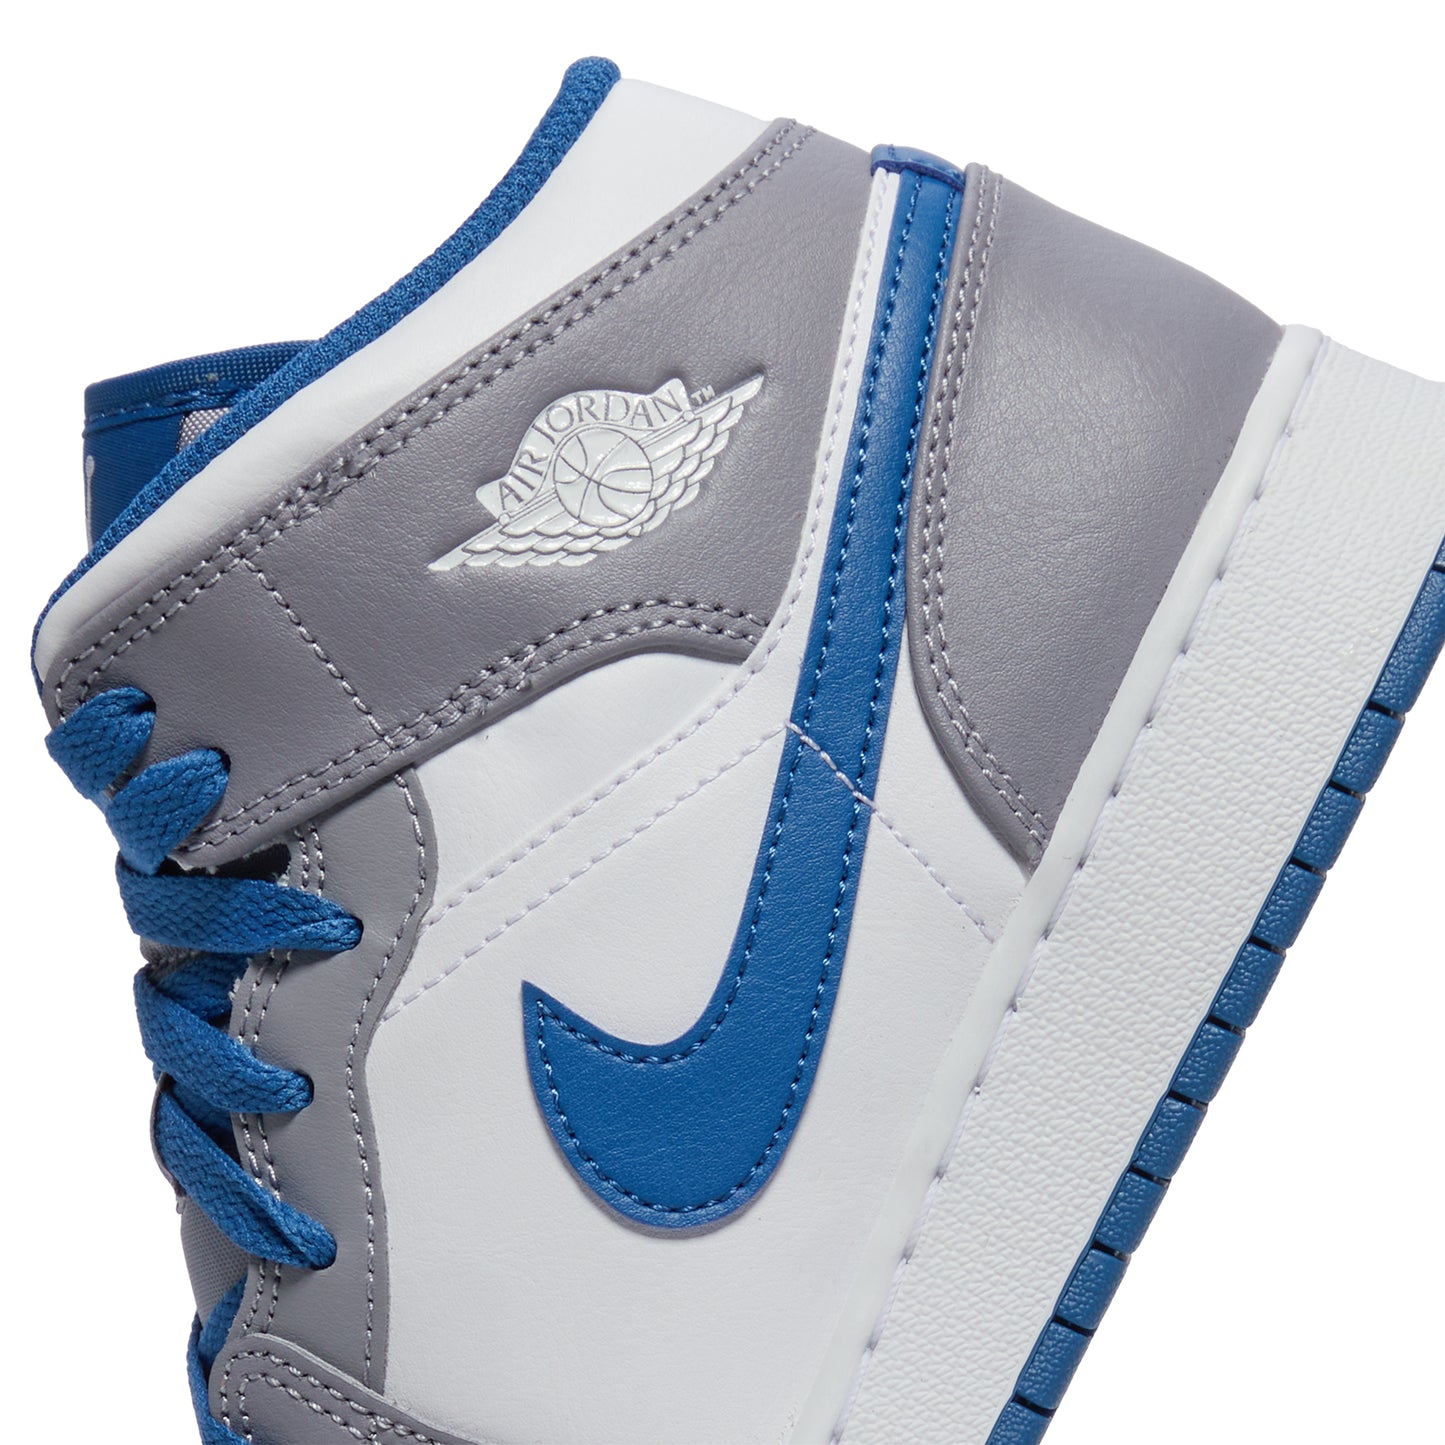 Nike Kids Air Jordan 1 Mid (Cement Grey/White/True Blue)